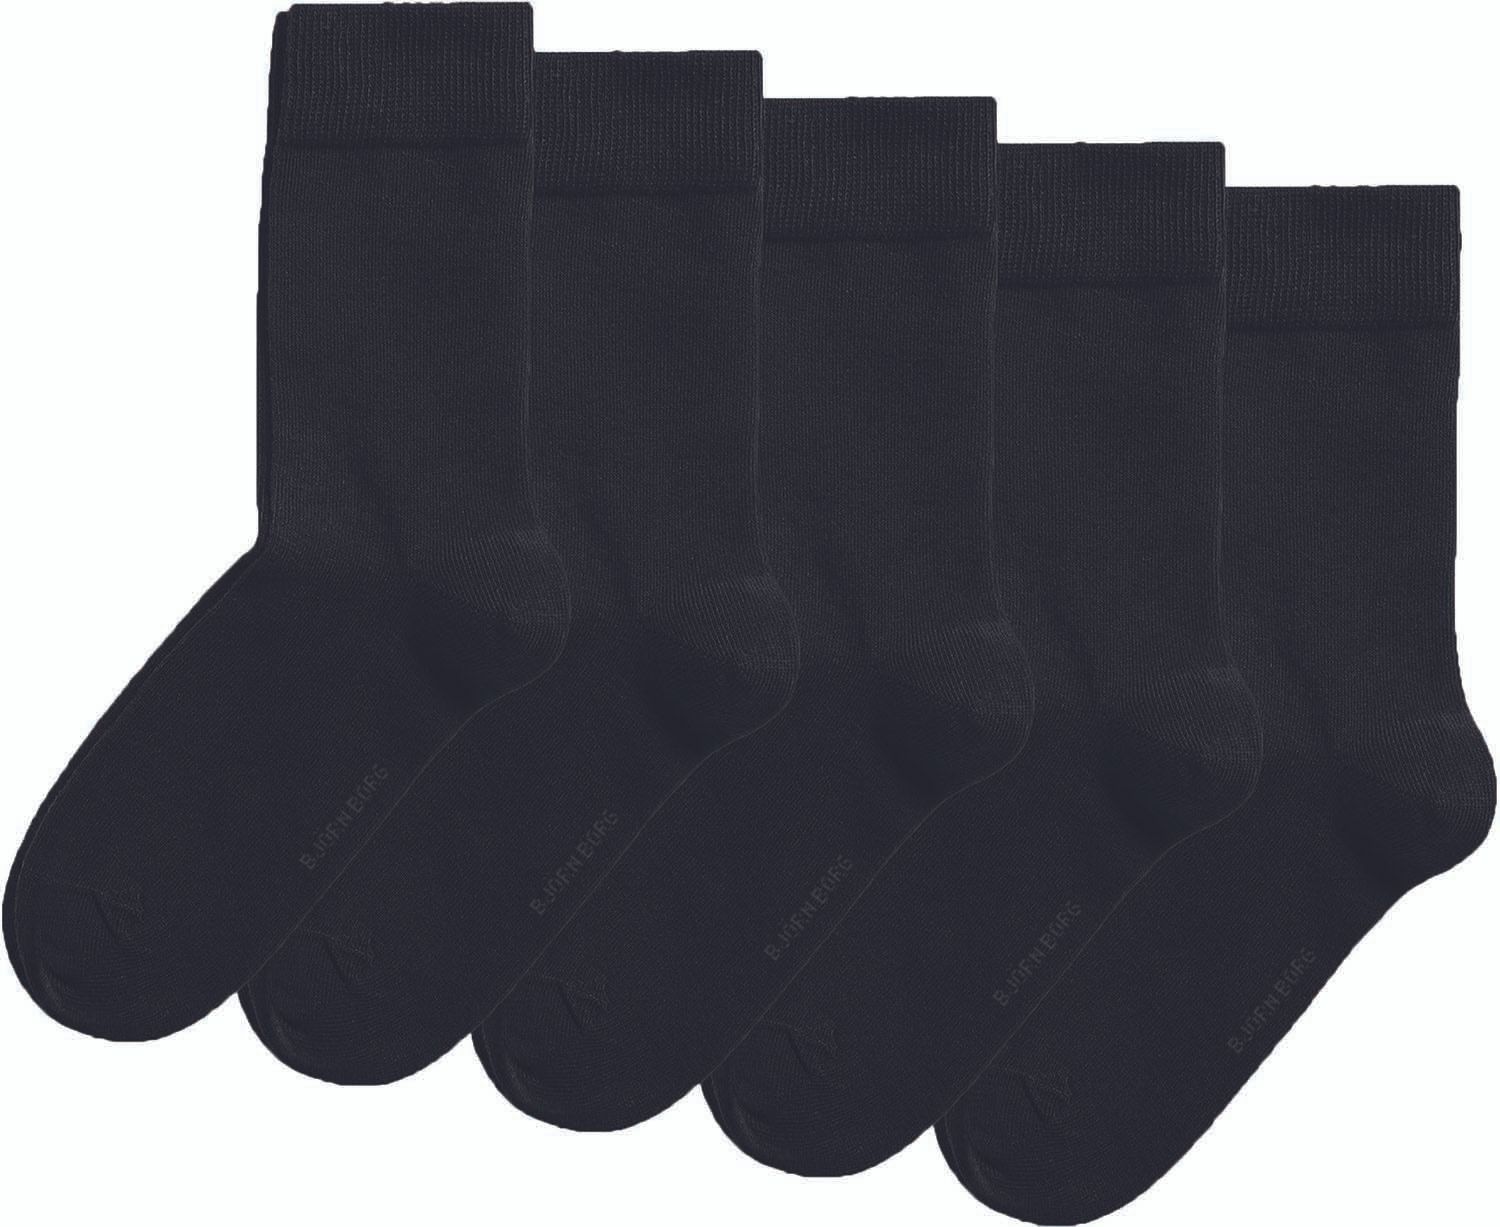 Bjorn Borg 5-Pack Socks Black size 41-45